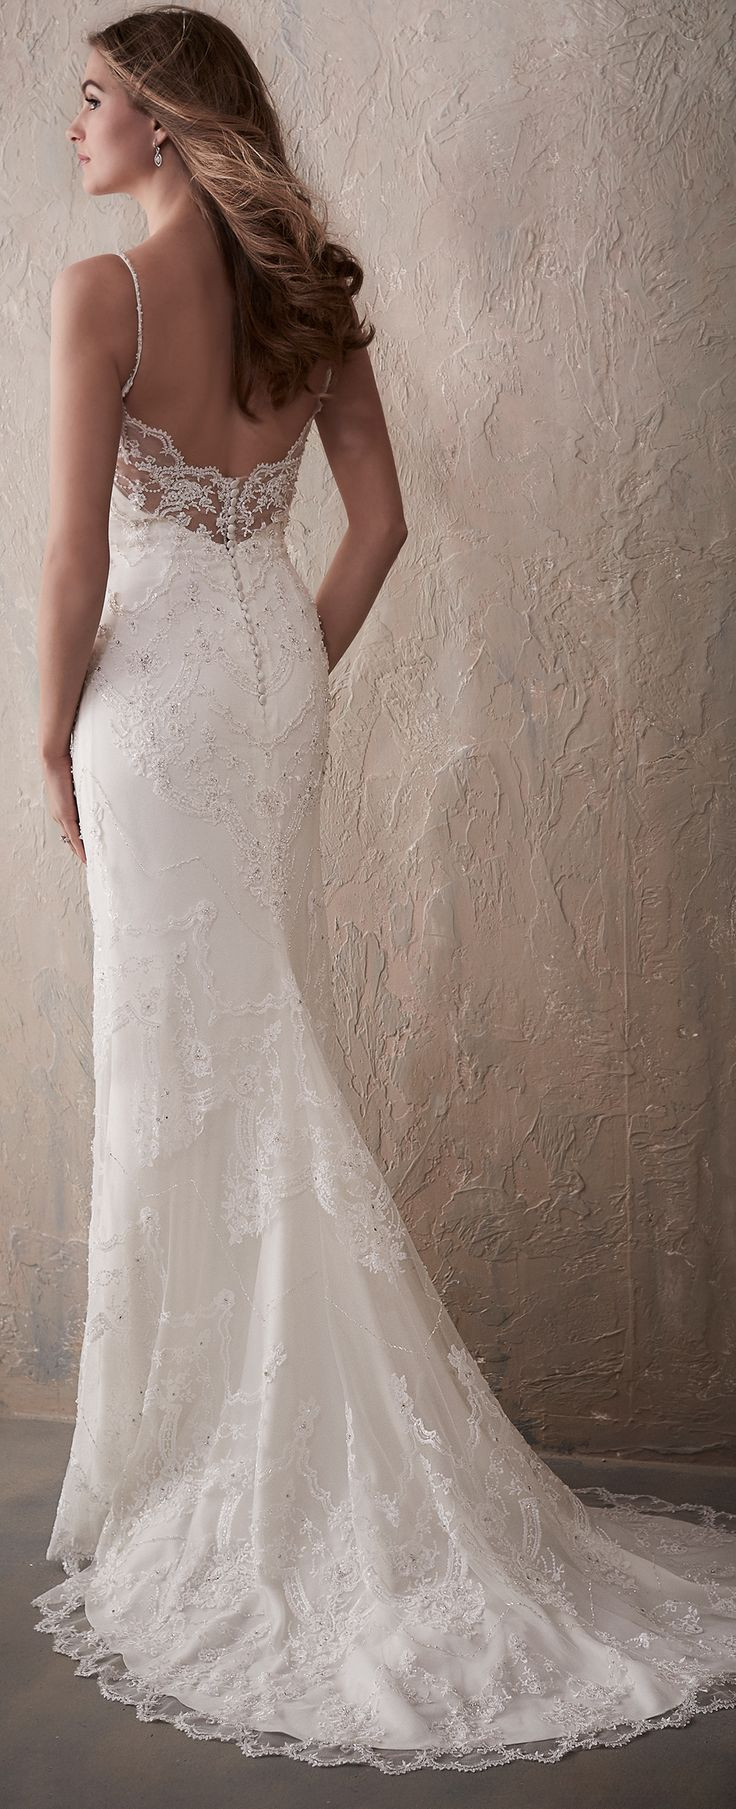 Low Back Wedding Dresses
 Best 25 Lace back wedding dress ideas on Pinterest